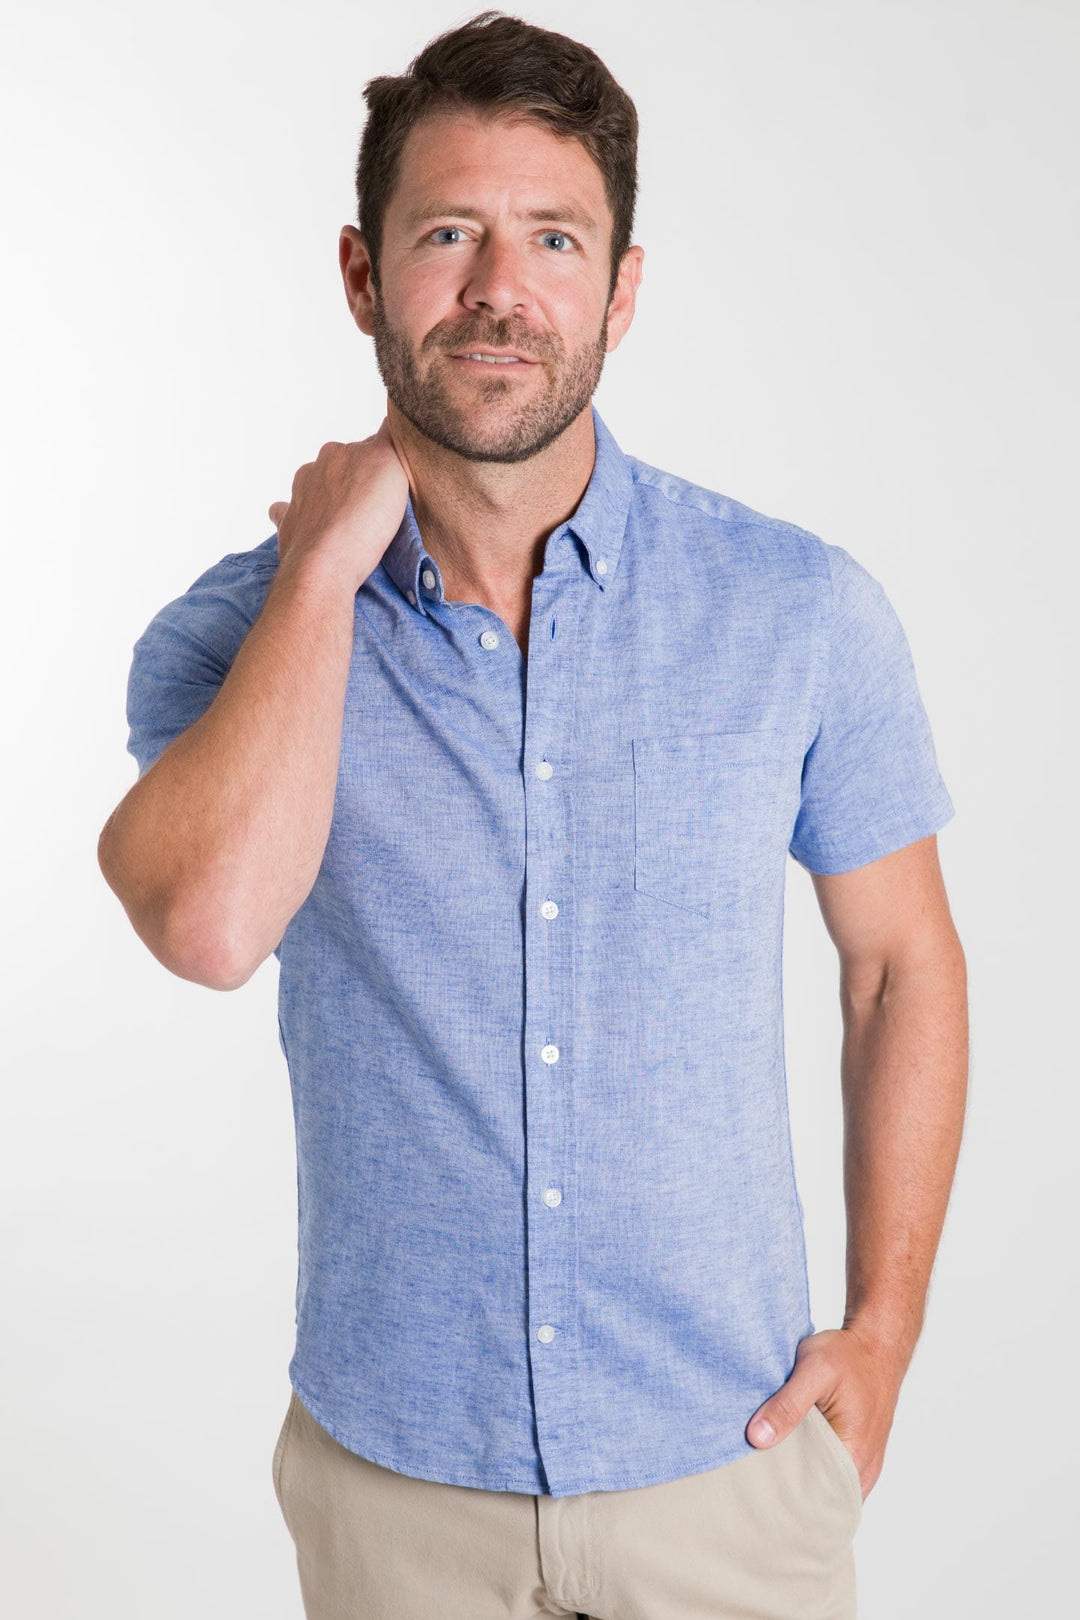 Ash & Erie Blue Linen Short Sleeve Shirt for Short Men   Short Sleeve Everyday Shirts